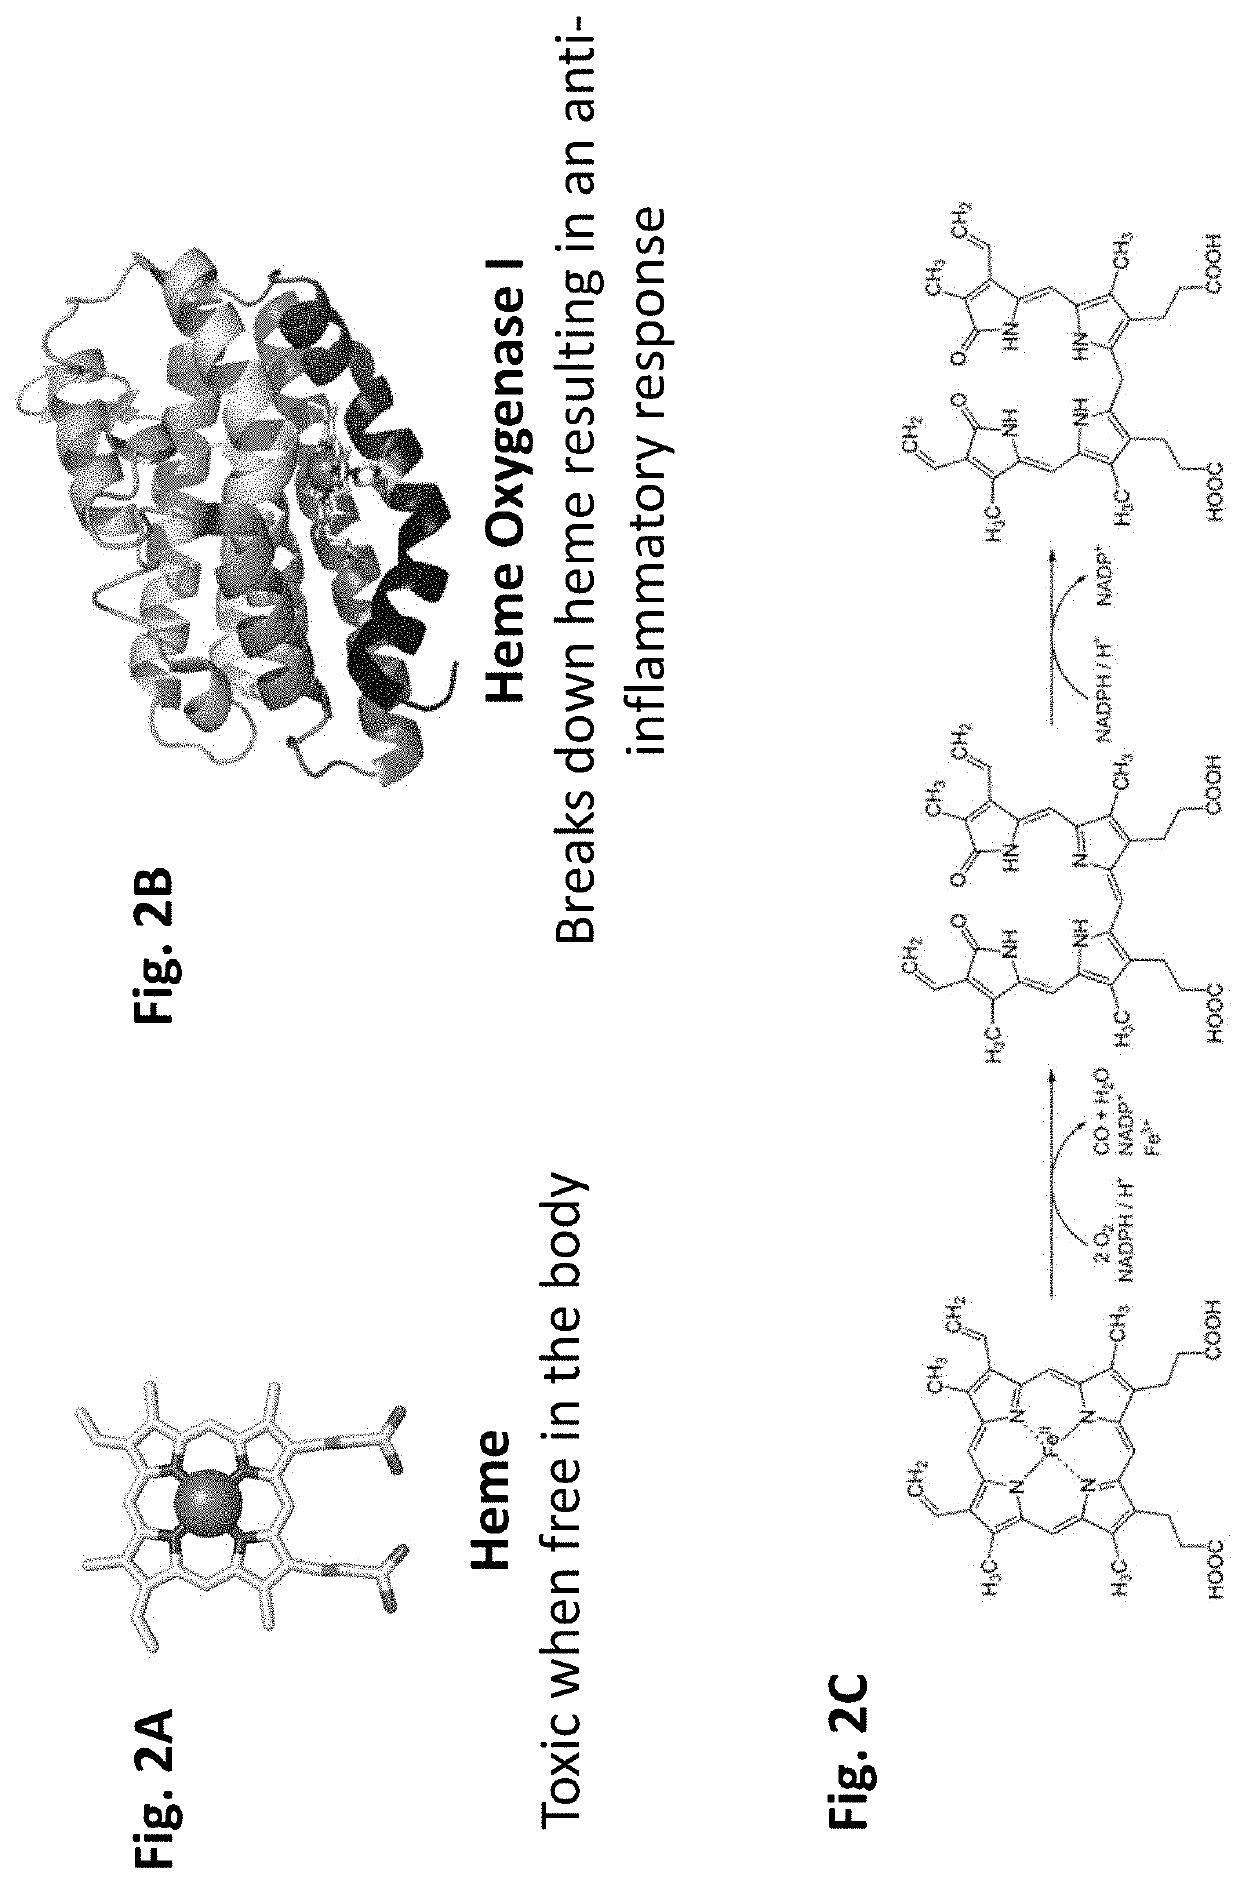 Heme peptide materials for anti-inflammatory regenerative nanobiomedicine